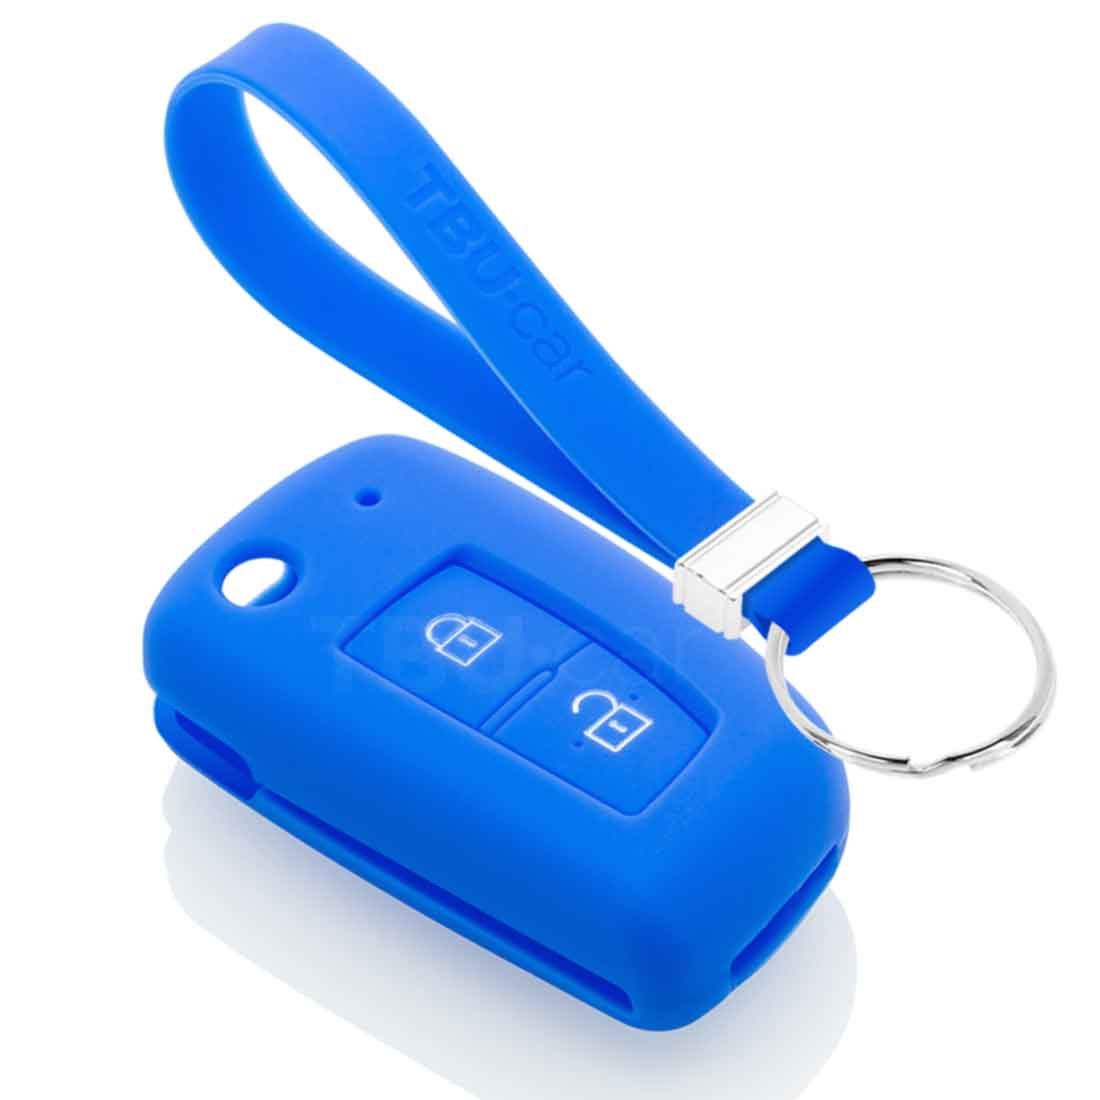 TBU car TBU car Autoschlüssel Hülle kompatibel mit Nissan 2 Tasten - Schutzhülle aus Silikon - Auto Schlüsselhülle Cover in Blau